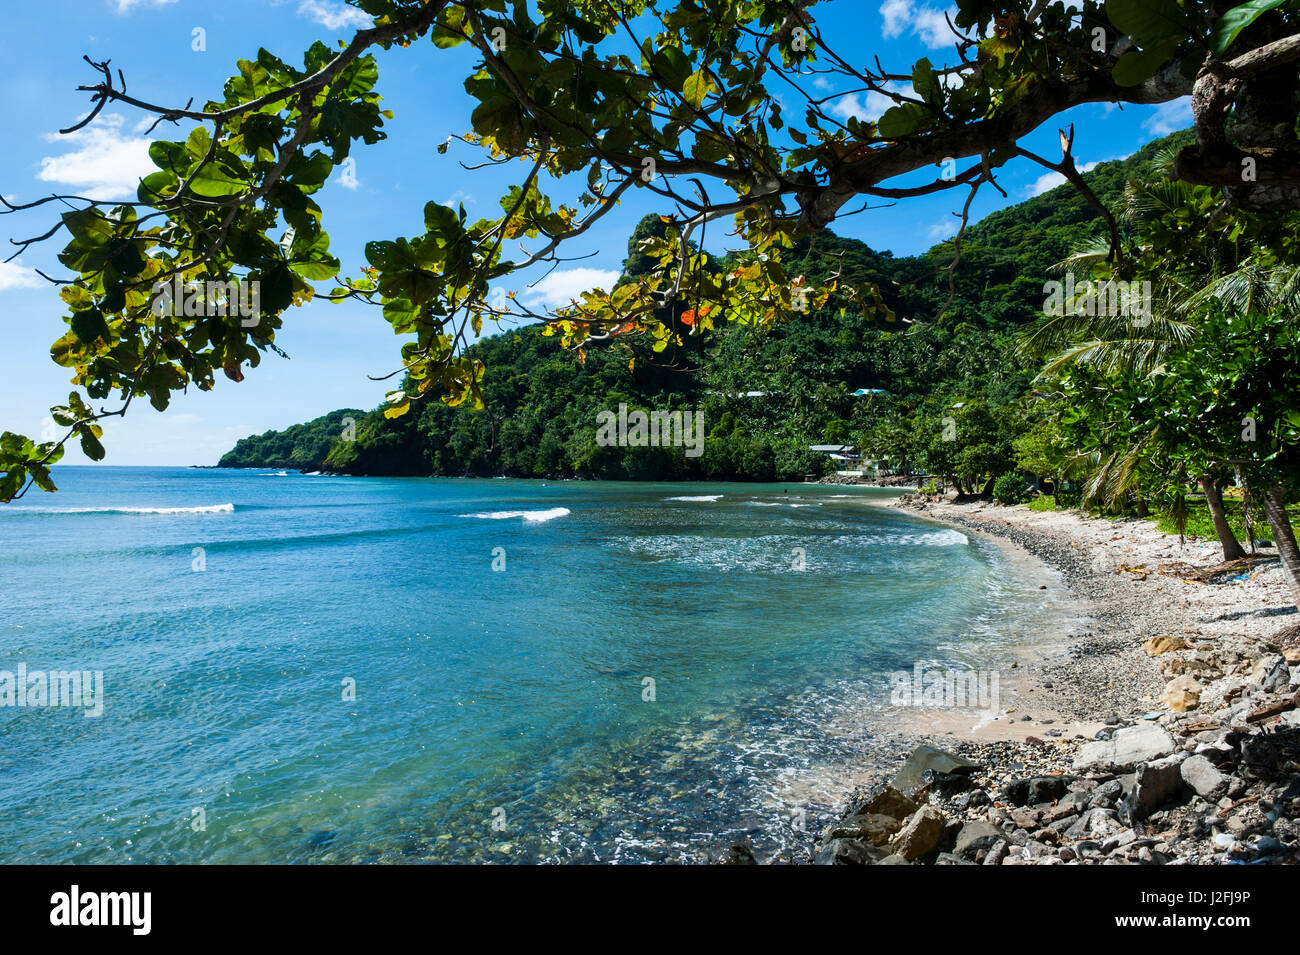 National Park of American Samoa, Tutuila island, American Samoa, South Pacific Stock Photo